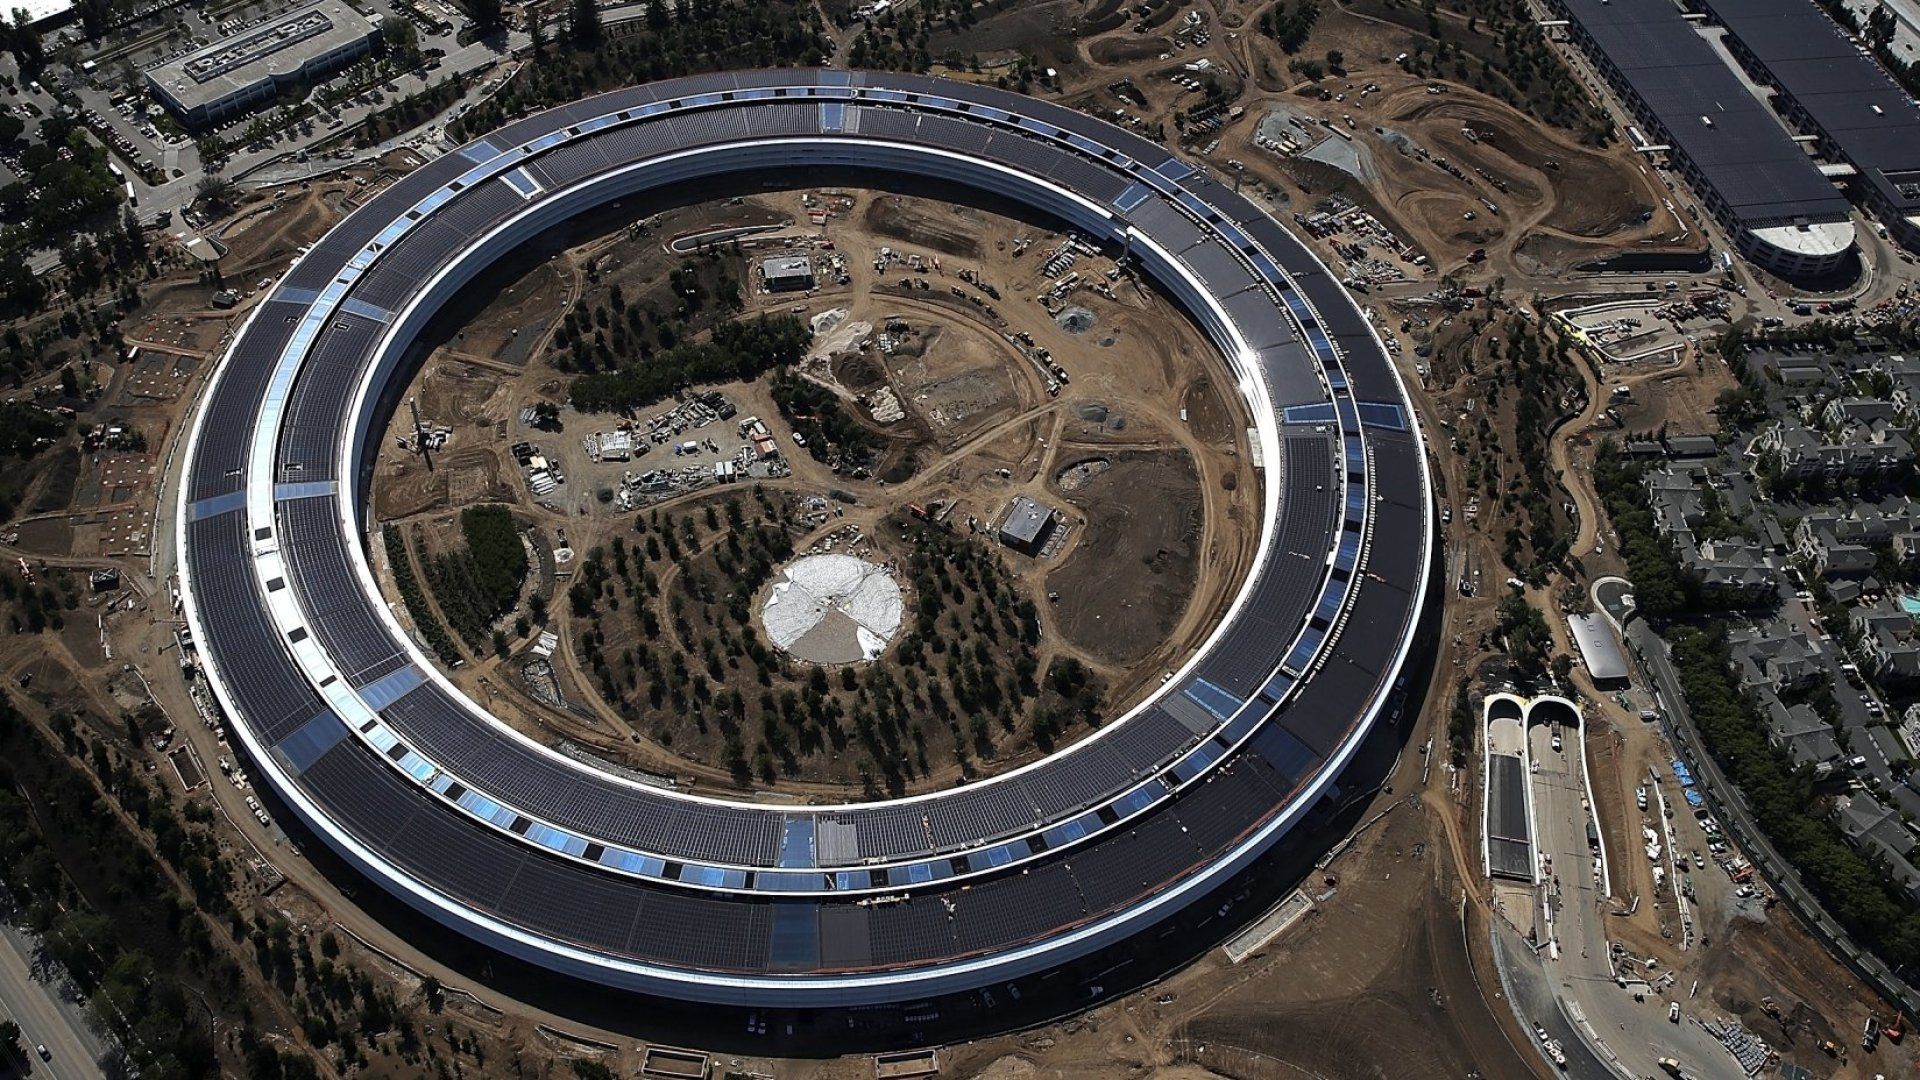 Meet Apple's New Steve Jobs Theater and $5 Billion 'Spaceship